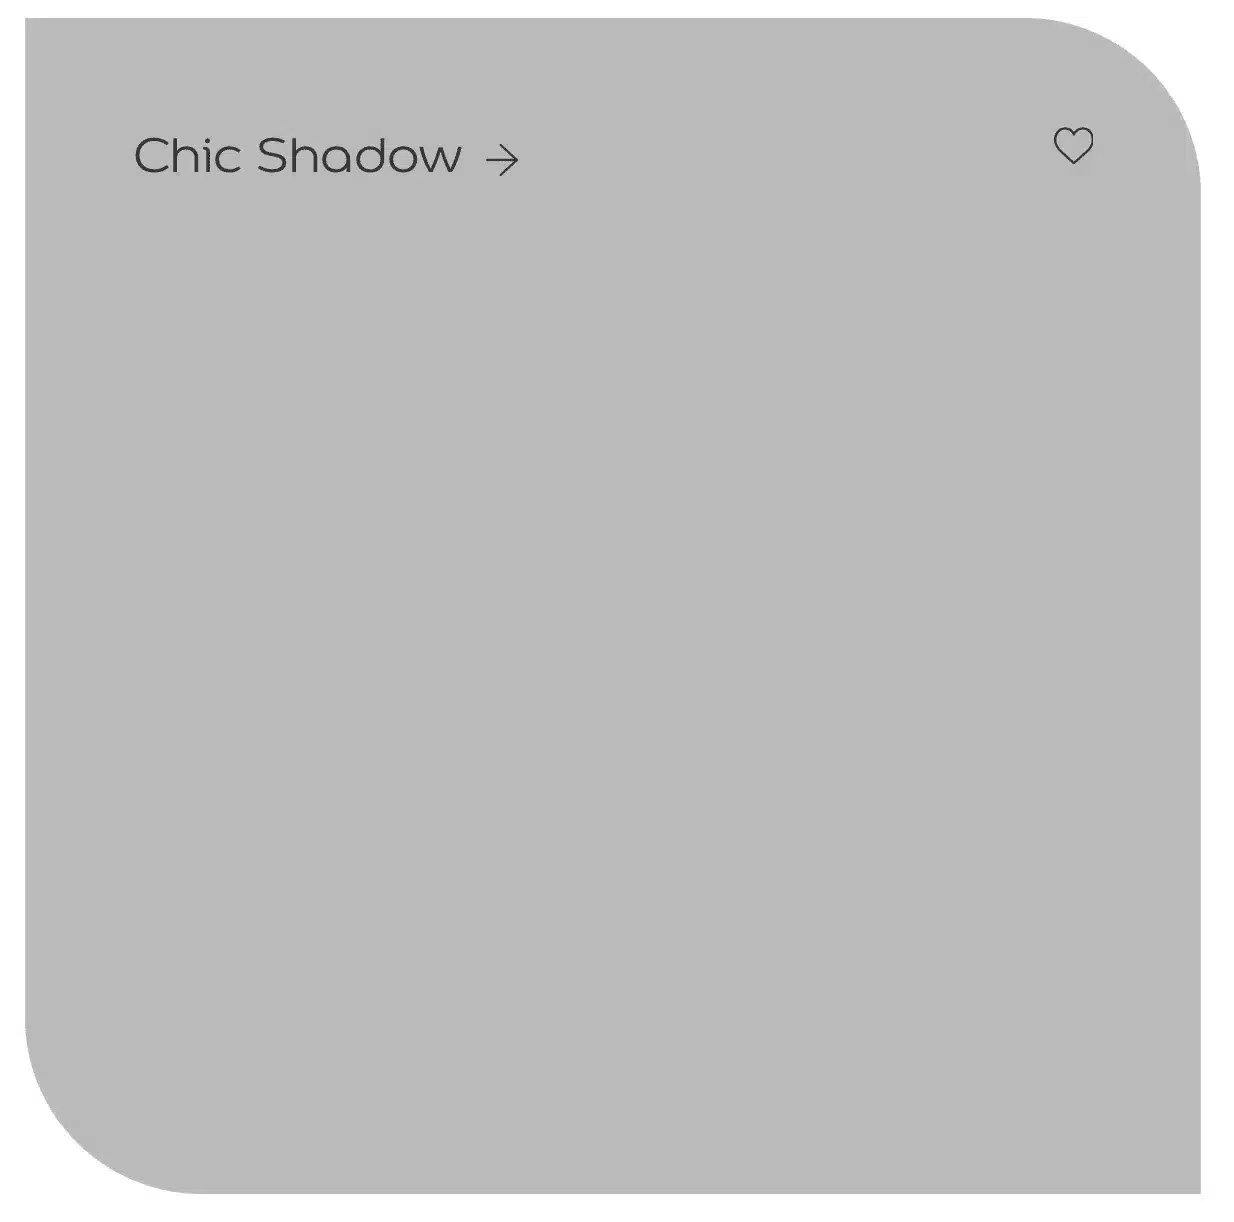 Chic shadow